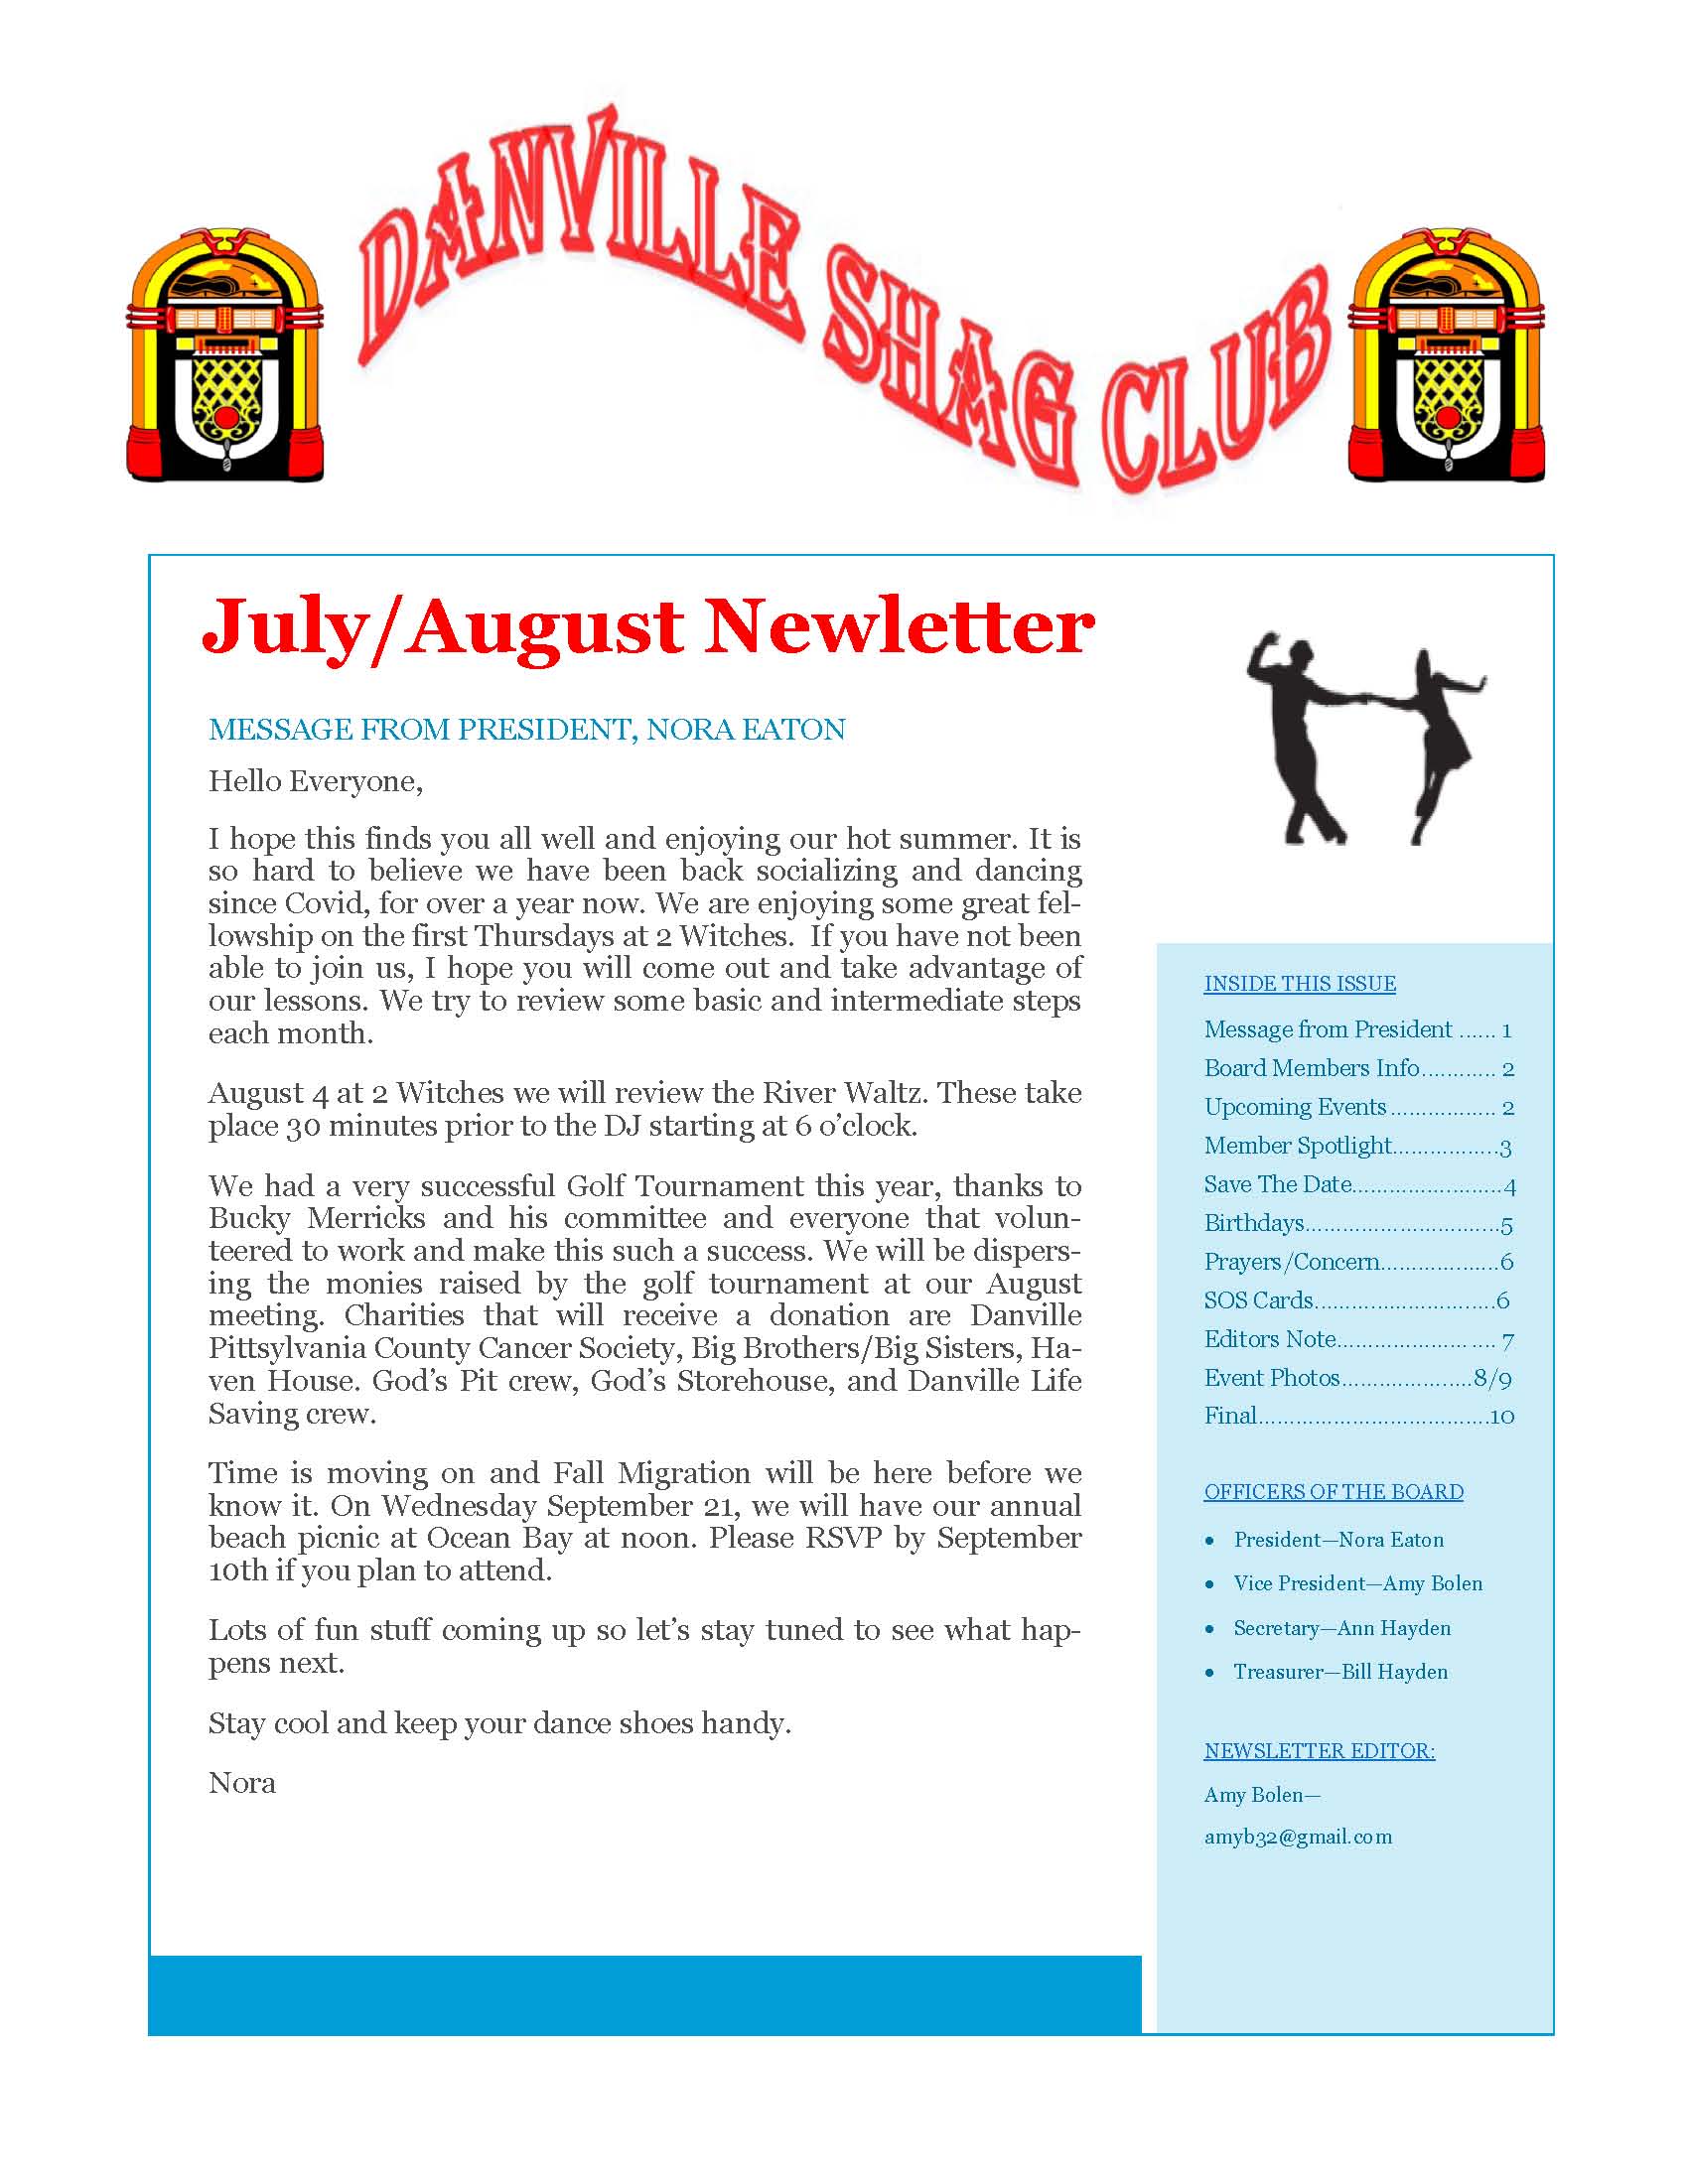 Danville Shag Club July Newsletter FINAL_Page_01.jpg